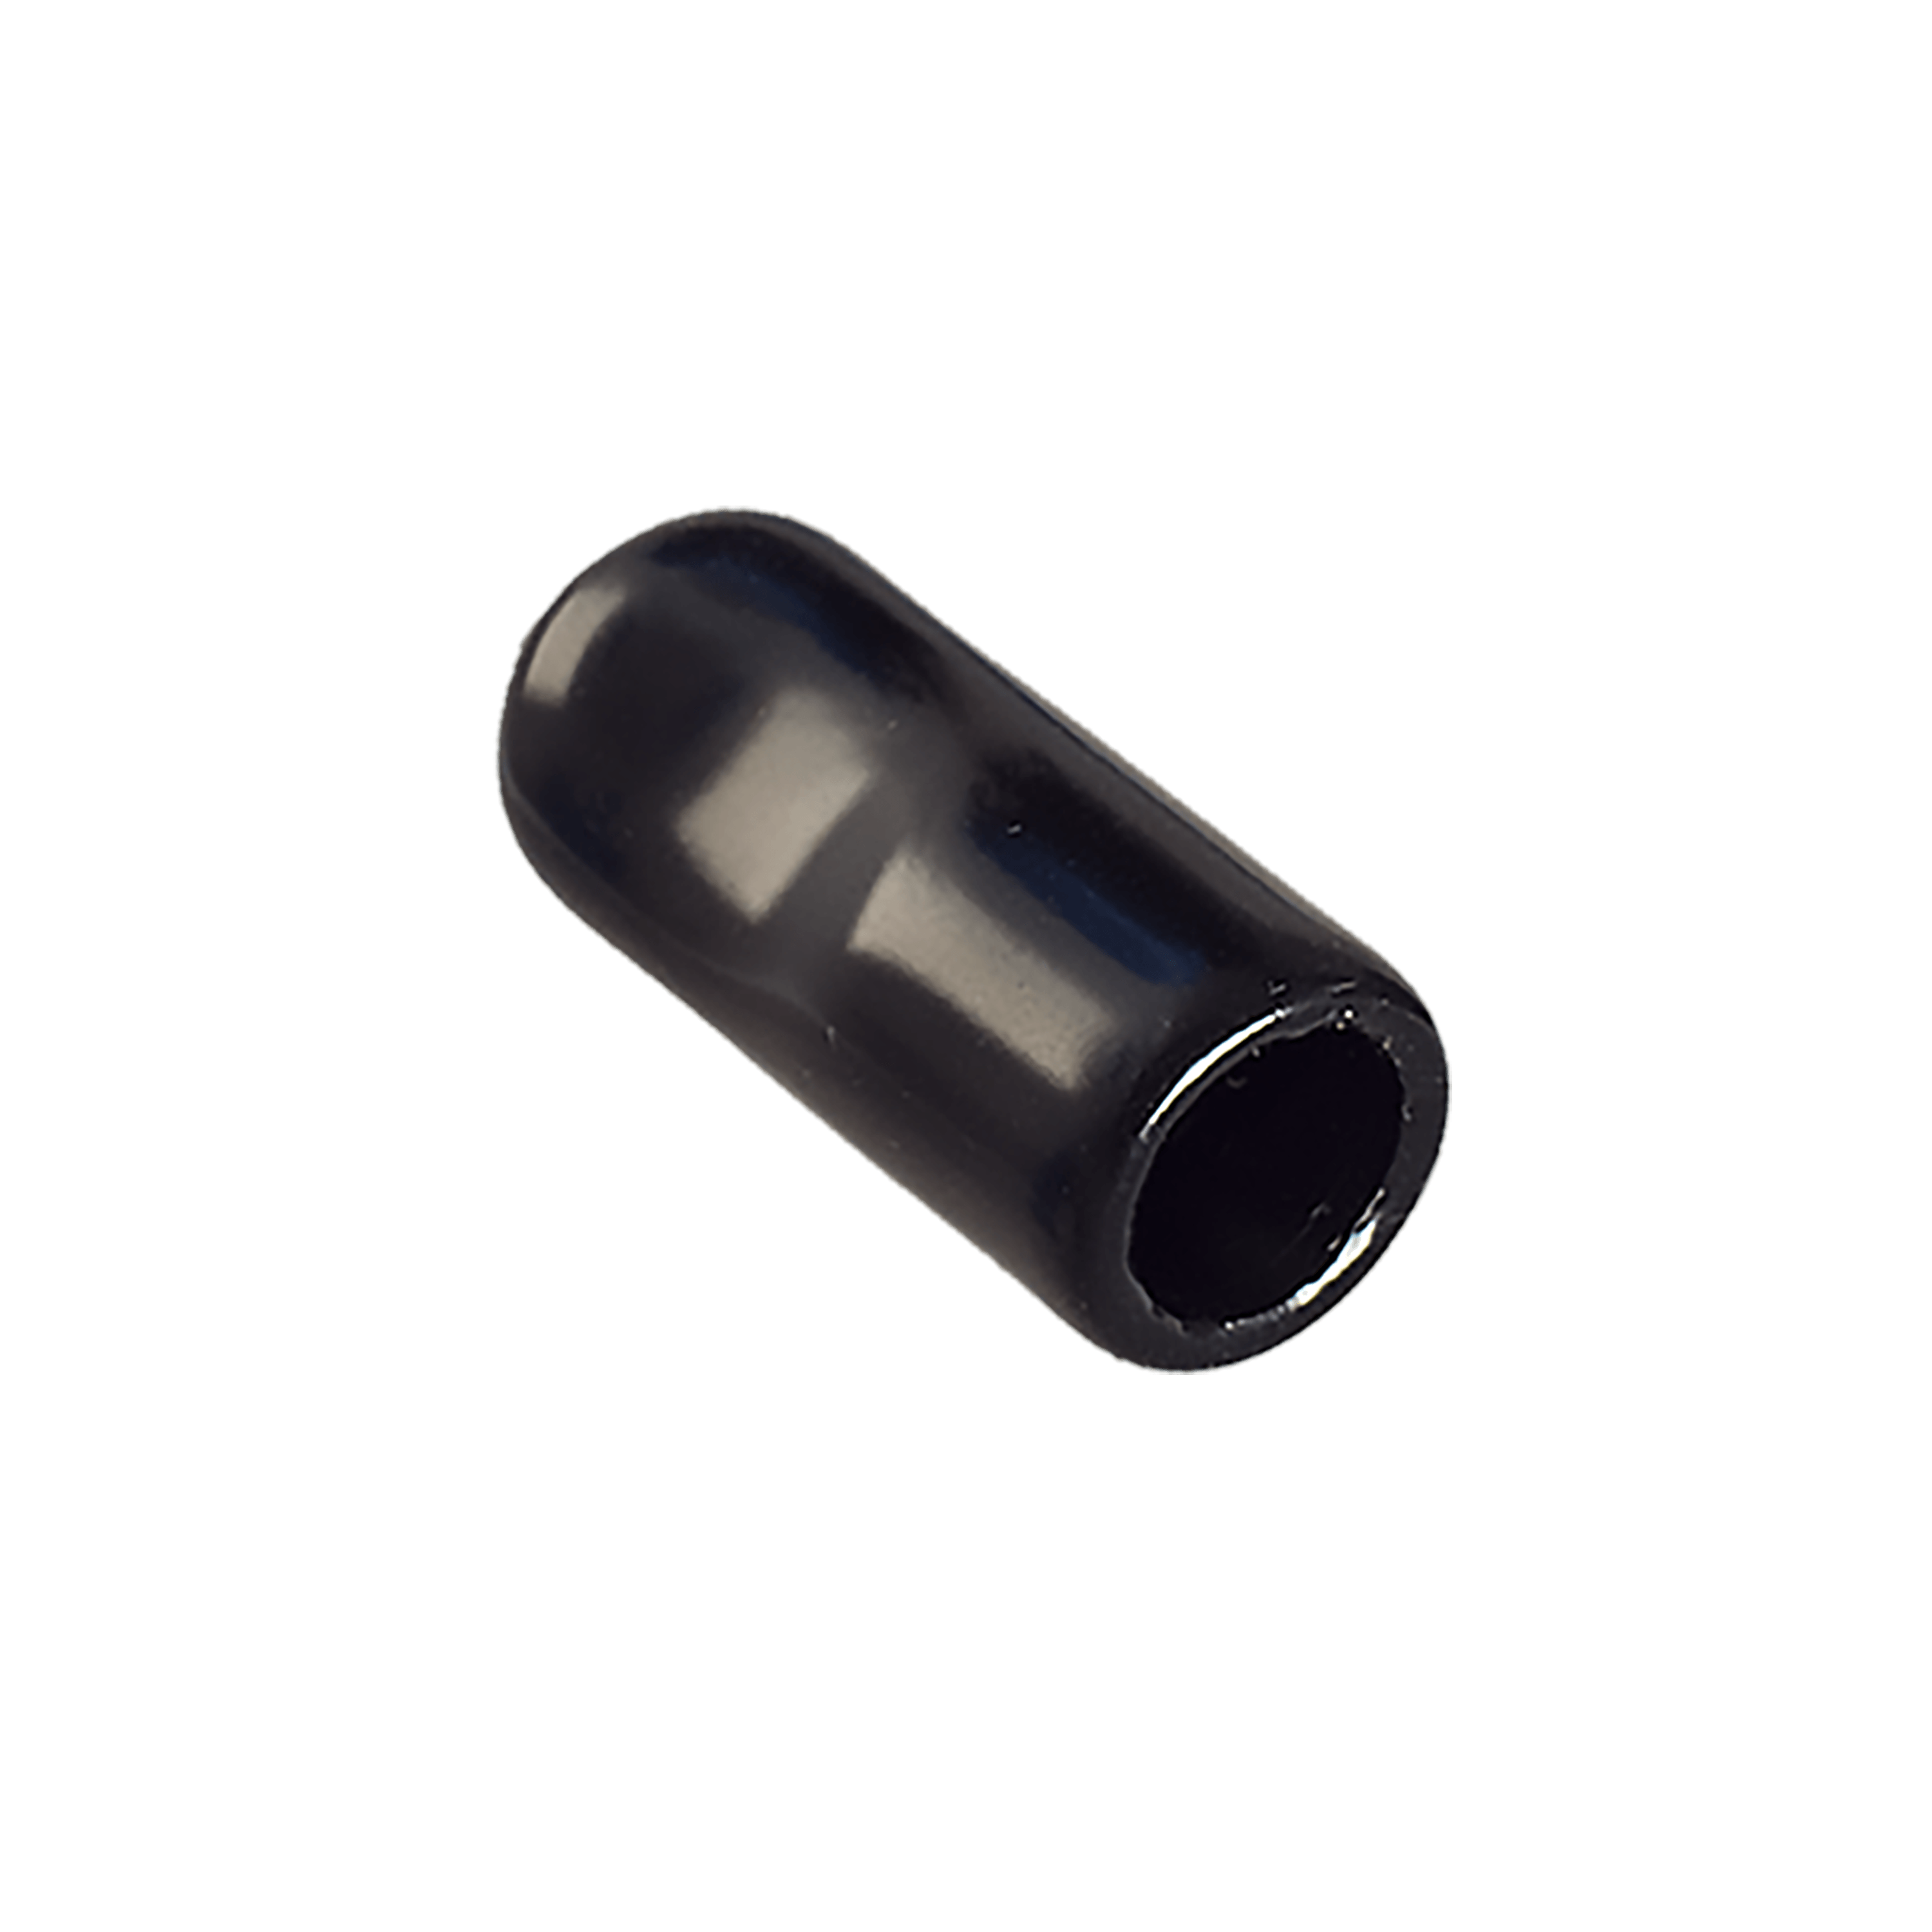 Rubber vaporizer adaptor mouthpiece in black